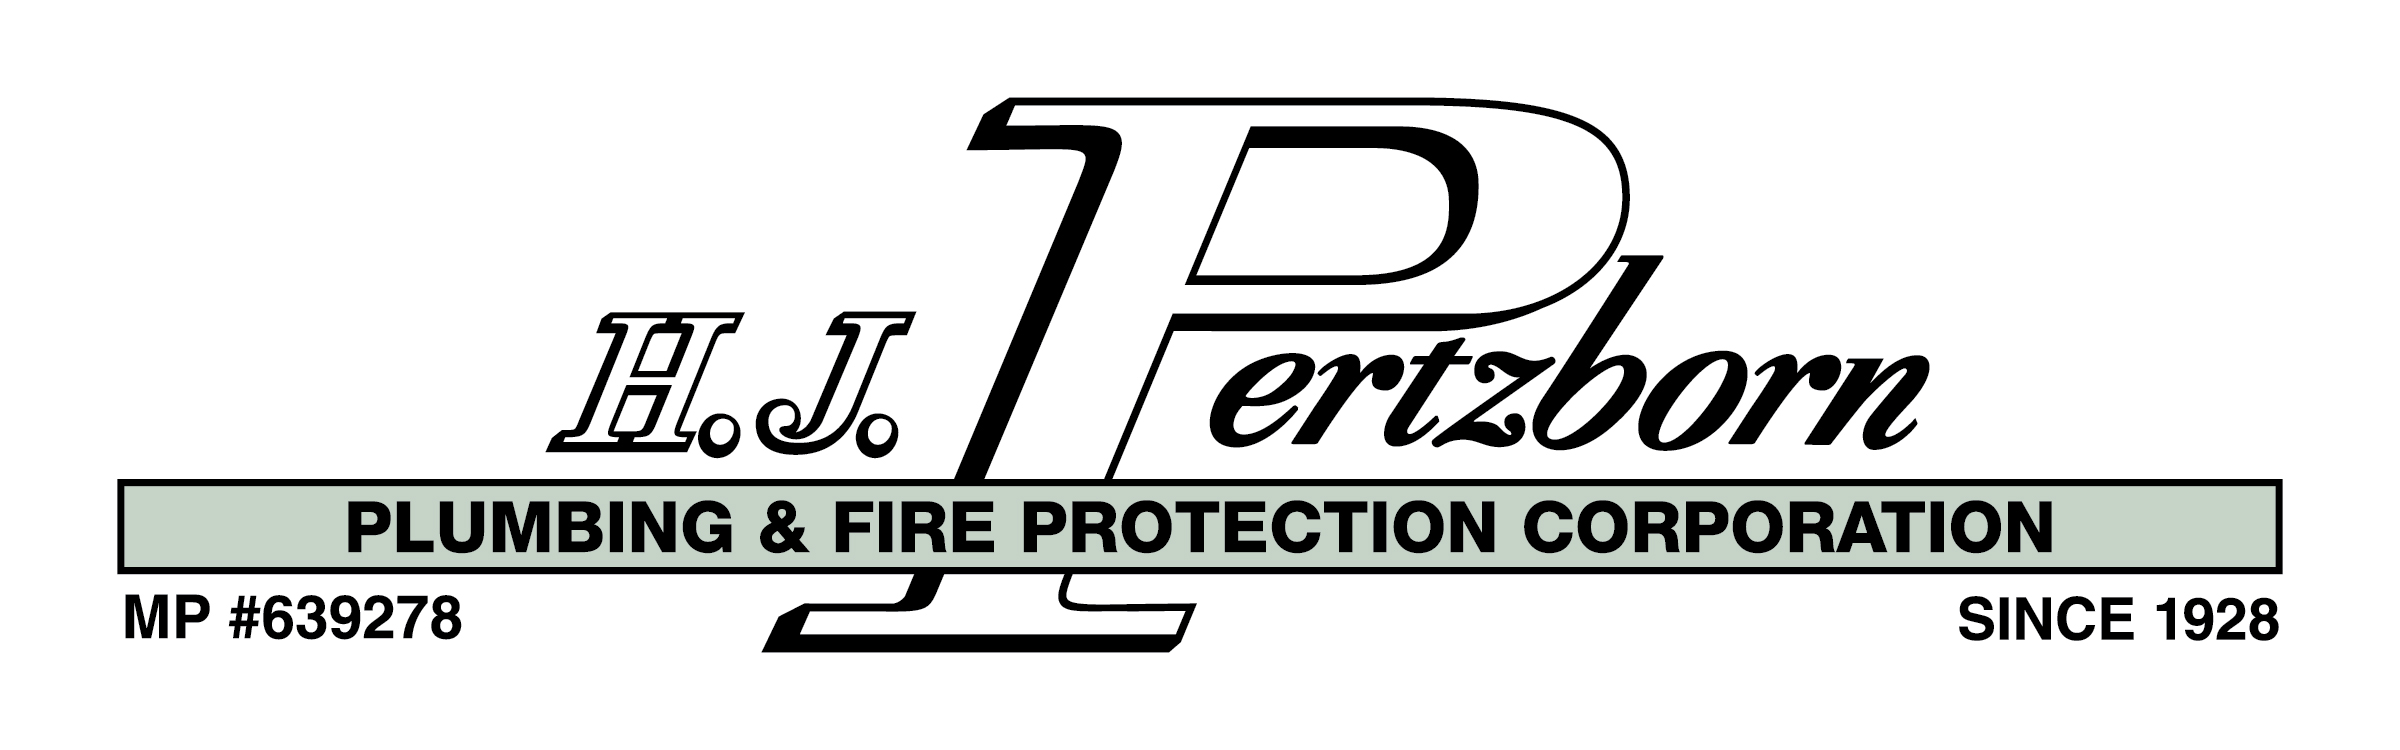 H.J. Pertzborn Plumbing and Fire Protection Corp.